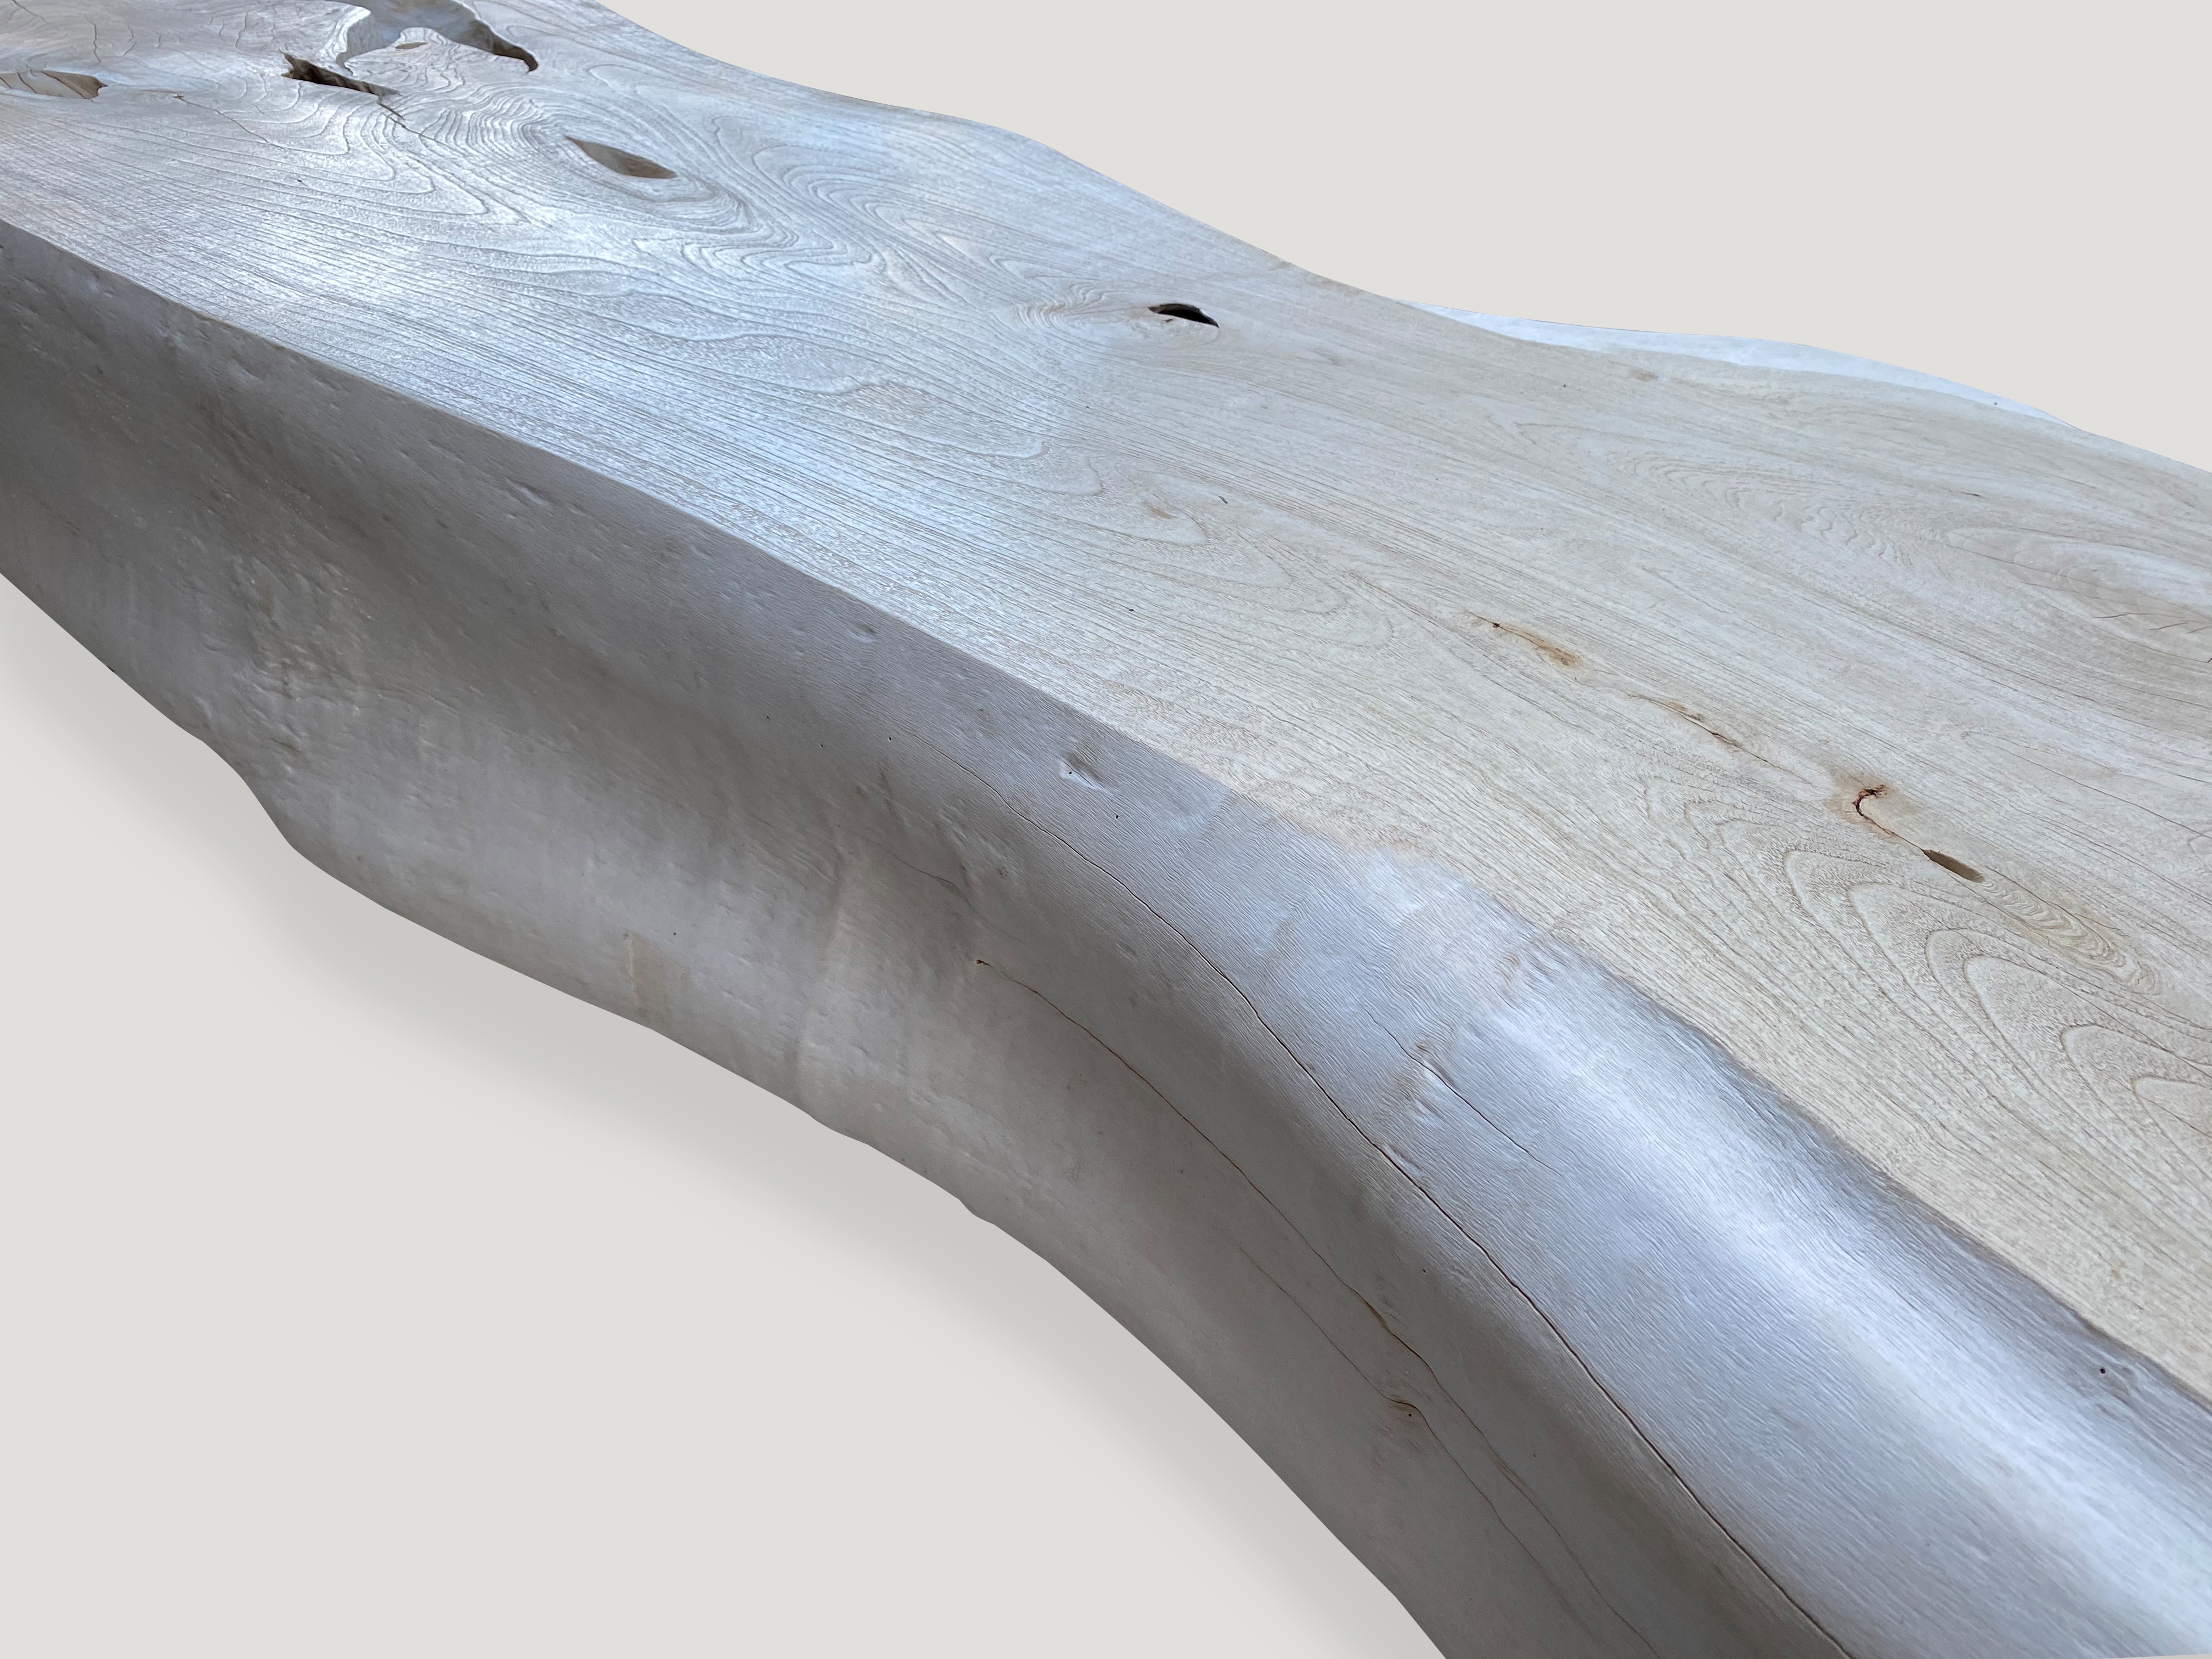 reclaimed teak wood root log or bench